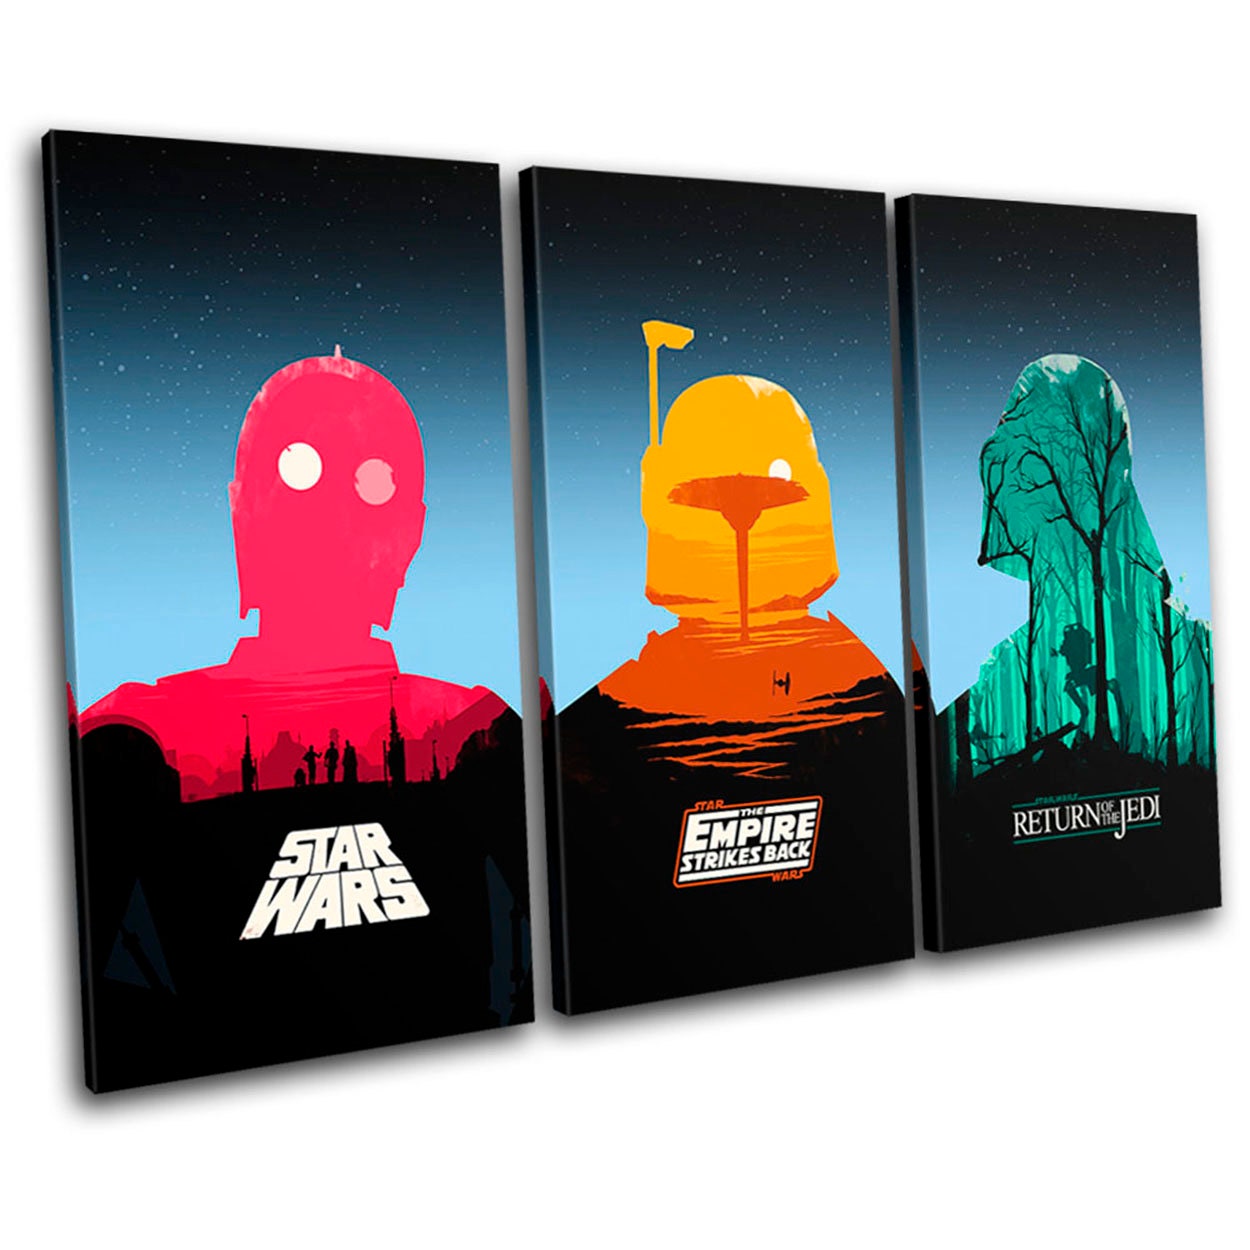 Rose kleur Veroorloven credit Star Wars Original Trilogy Posters Pop Art Movie Greats Canvas - Etsy